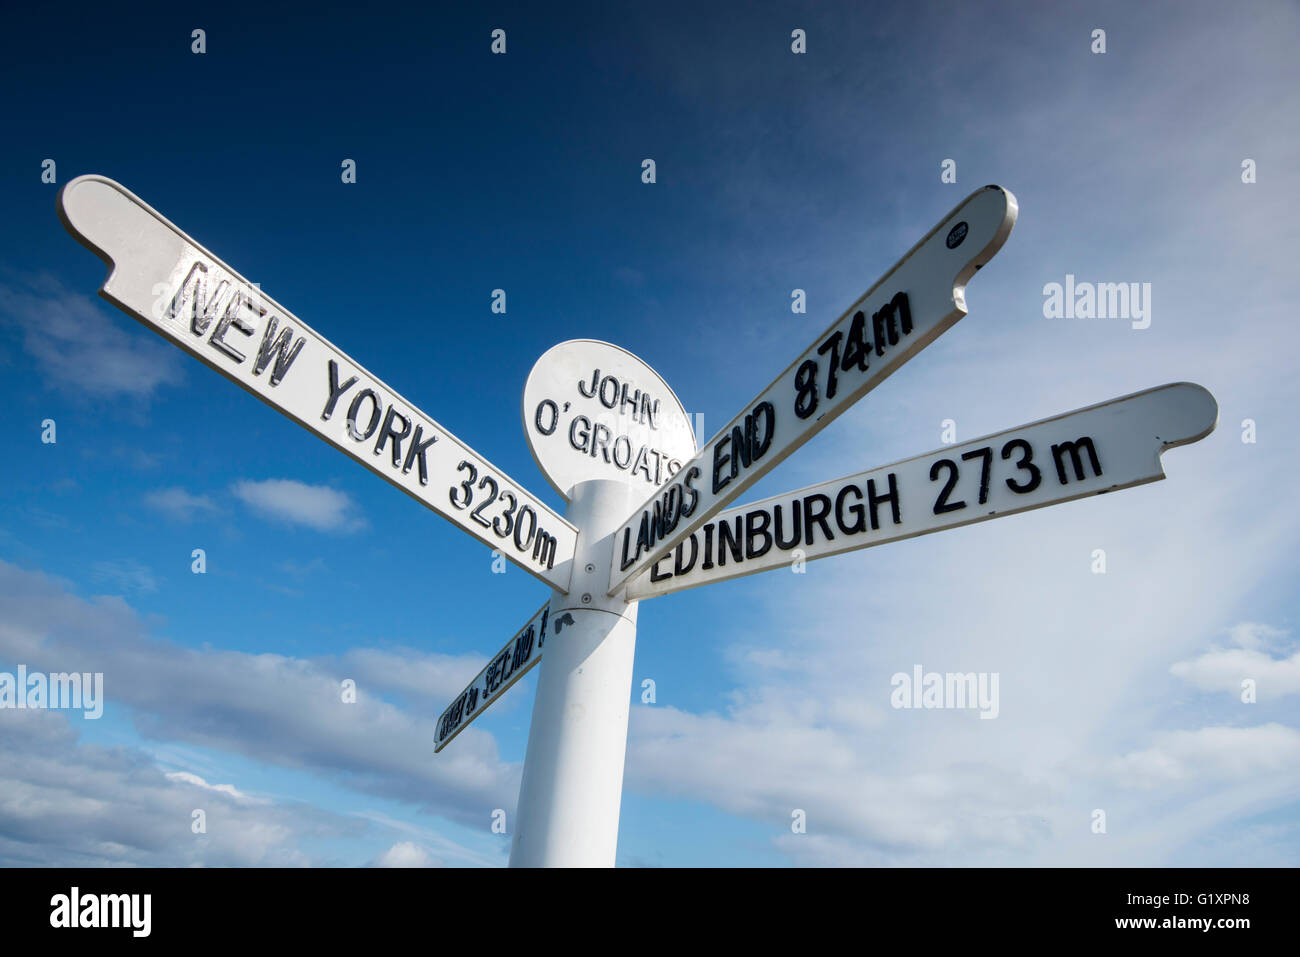 Cartello iconica contro un cielo blu a John O'Semole, Caithness in Scozia UK Foto Stock